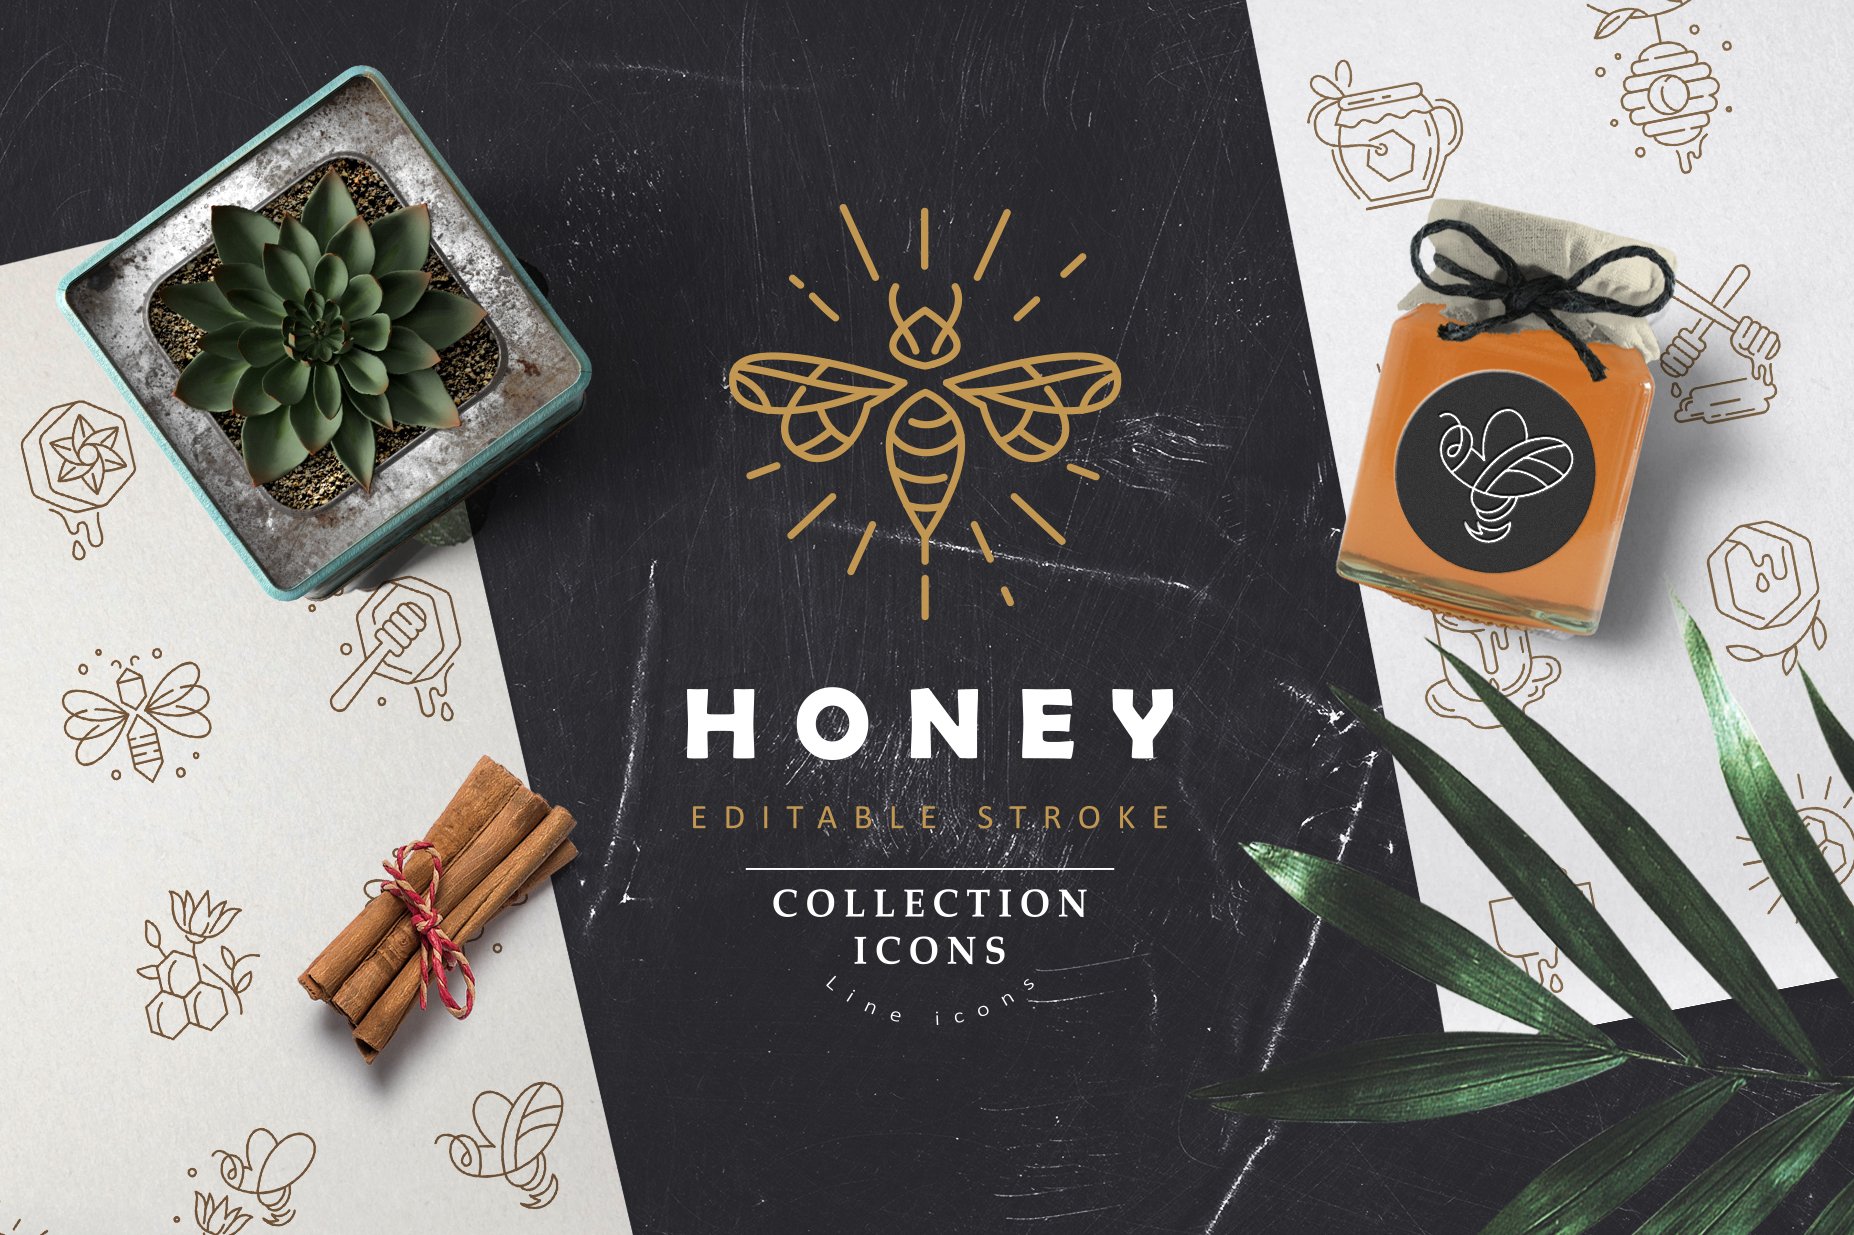 Honey icons & logos cover image.